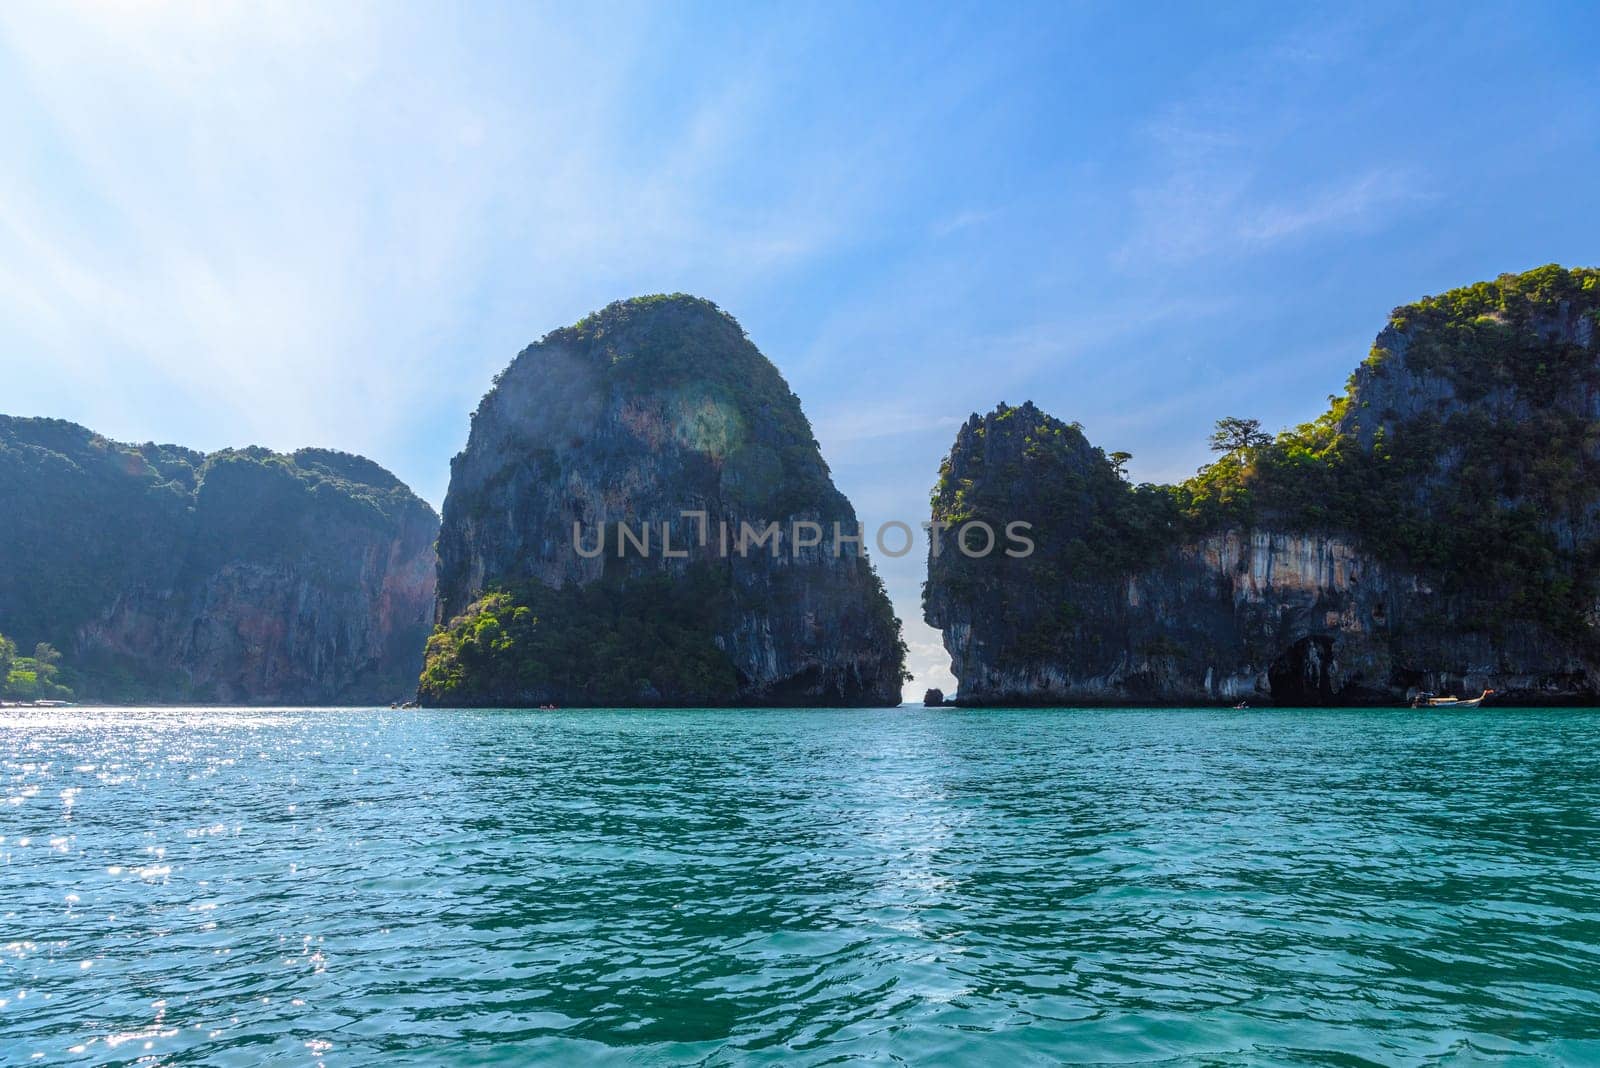 Huge cliff rocks in azure water, Railay beach, Ao Nang, Krabi, Thailand by Eagle2308